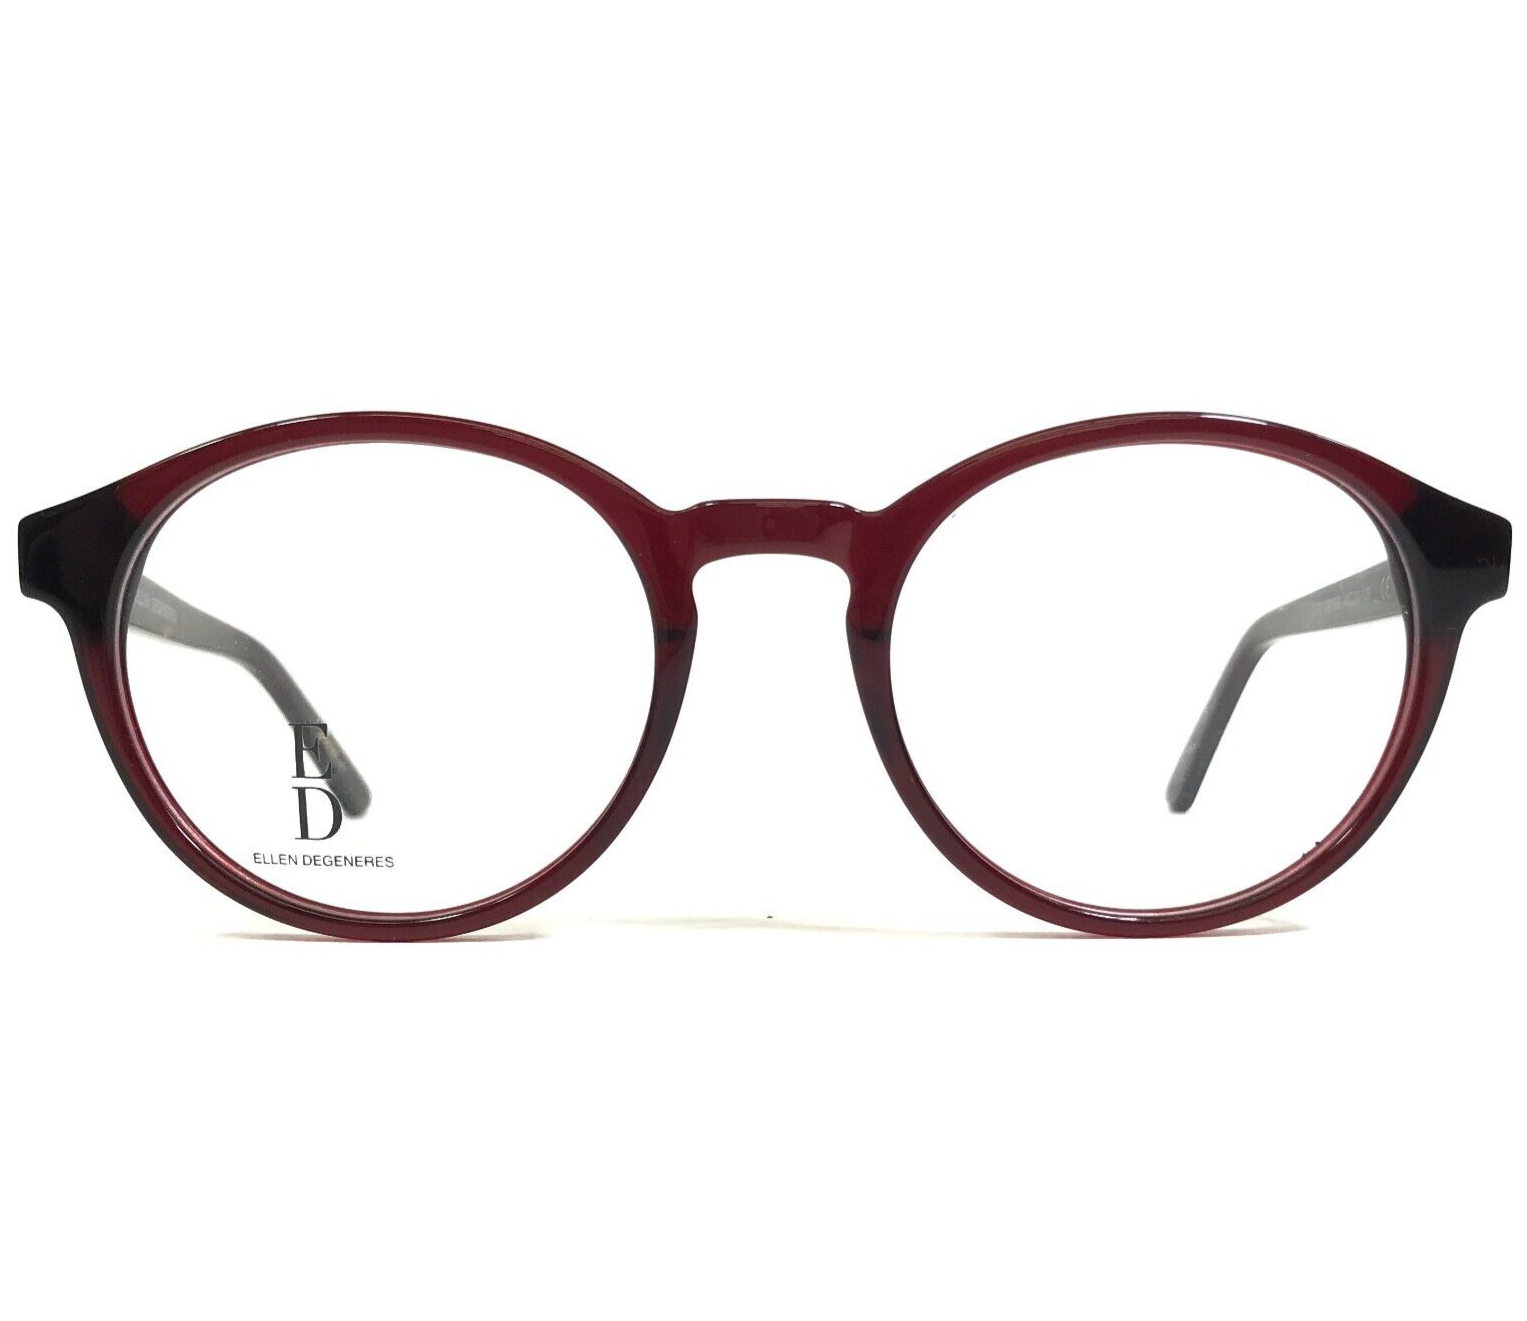 Primary image for Ellen Degeneres Eyeglasses Frames O-29 CRYBG Clear Burgundy Red Round 49-20-135